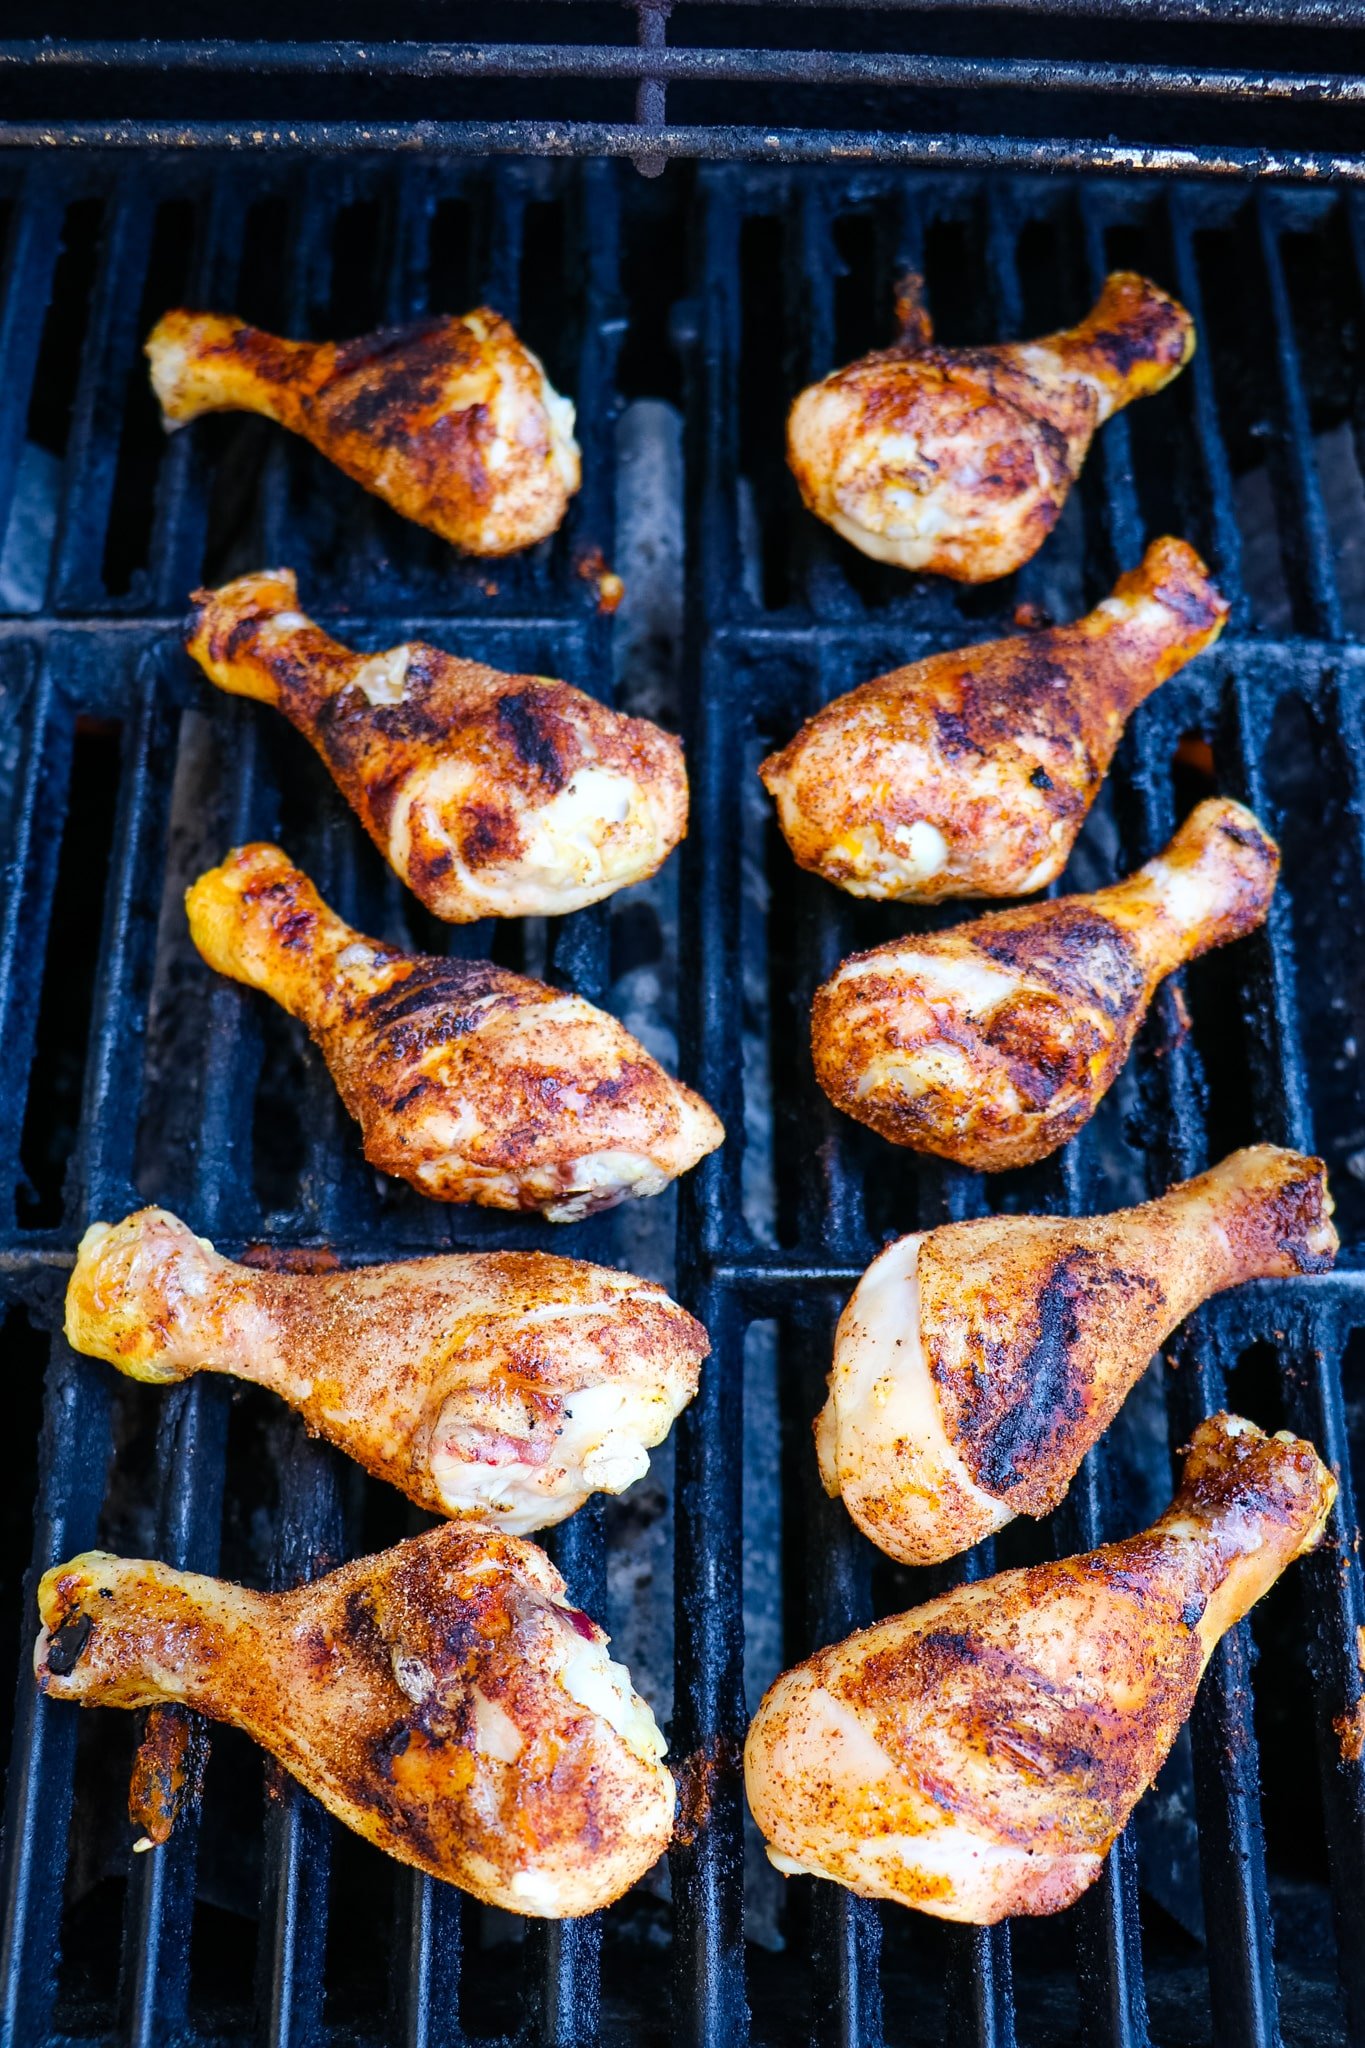 Ten seasoned chicken legs cooking on the grill.